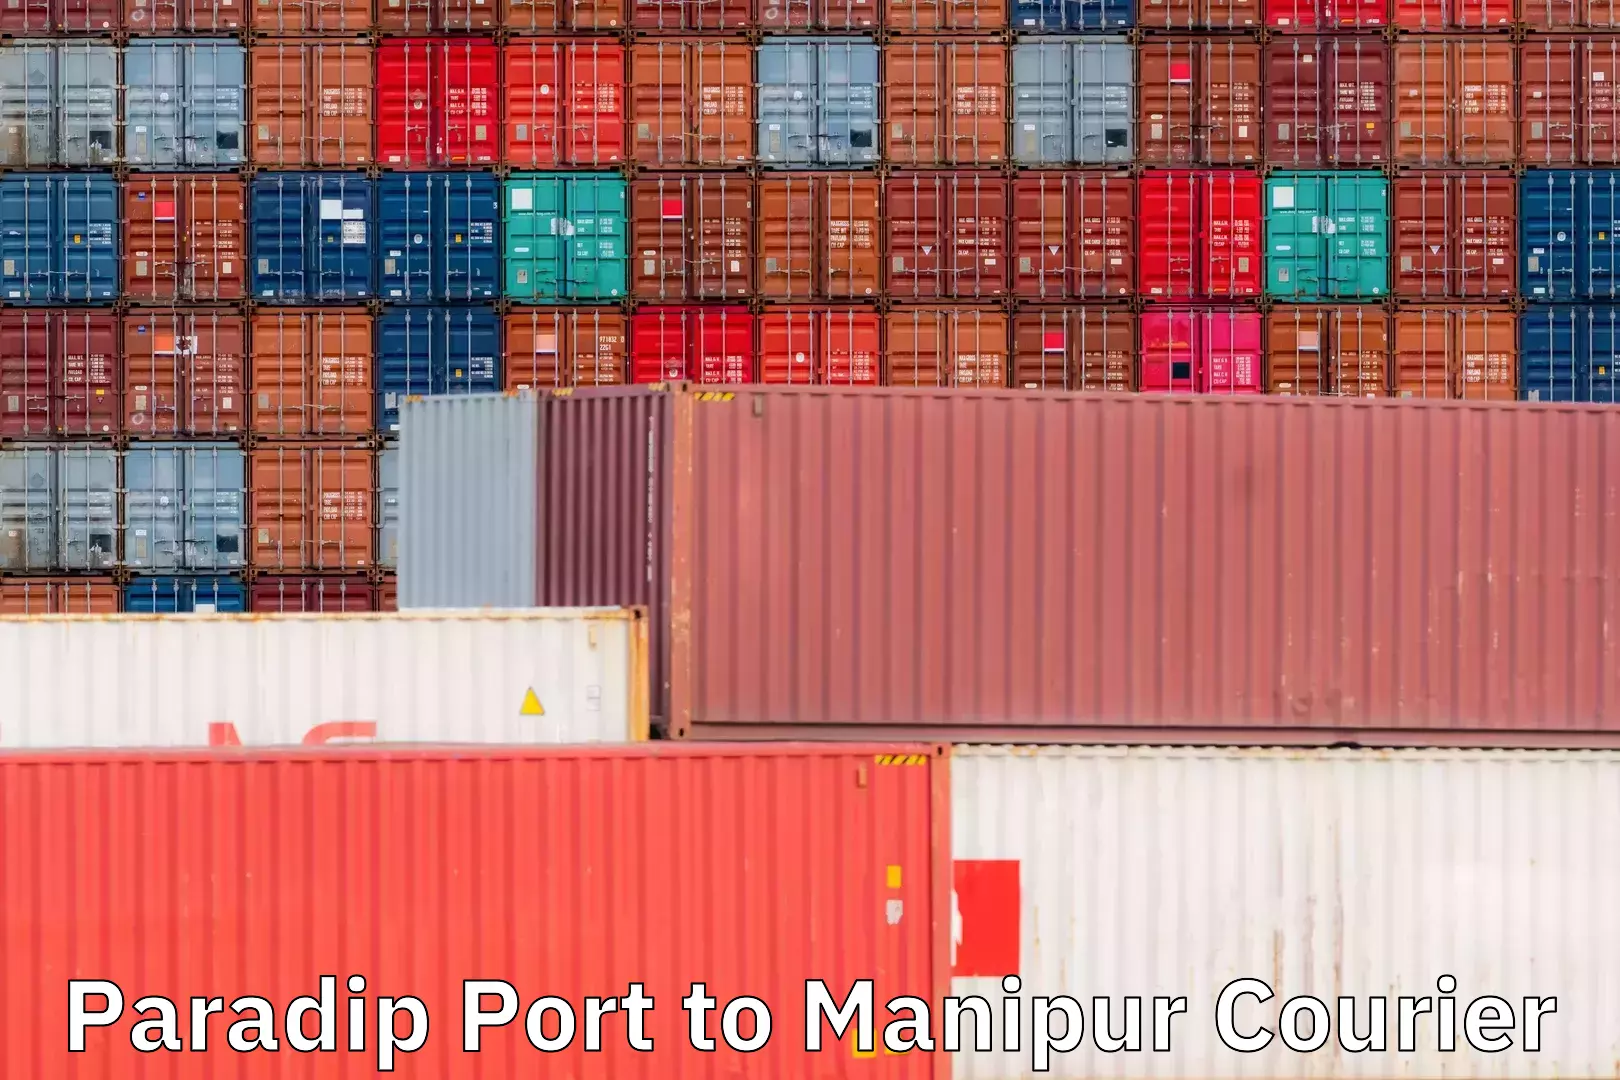 Comprehensive parcel tracking Paradip Port to Churachandpur